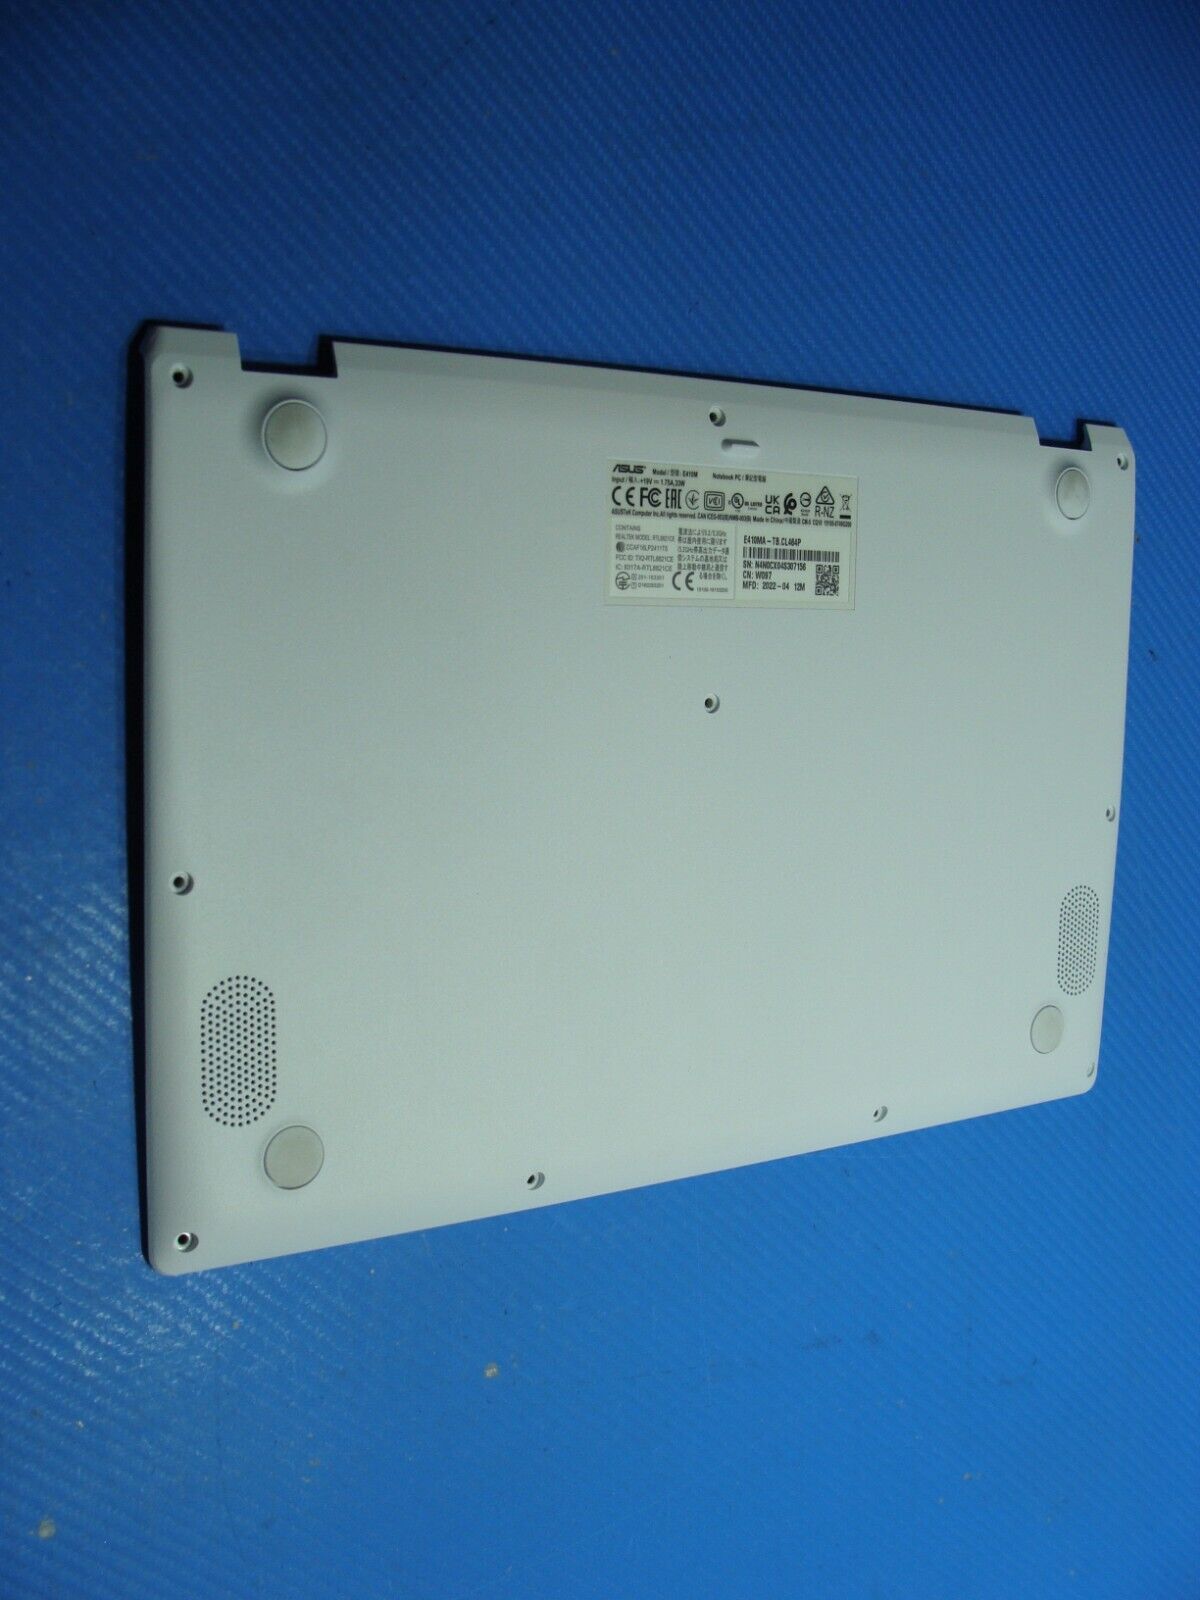 Asus 14” E410MA-TB.CL464P Genuine Laptop Bottom Case Base Cover 3CBKWBAJN30